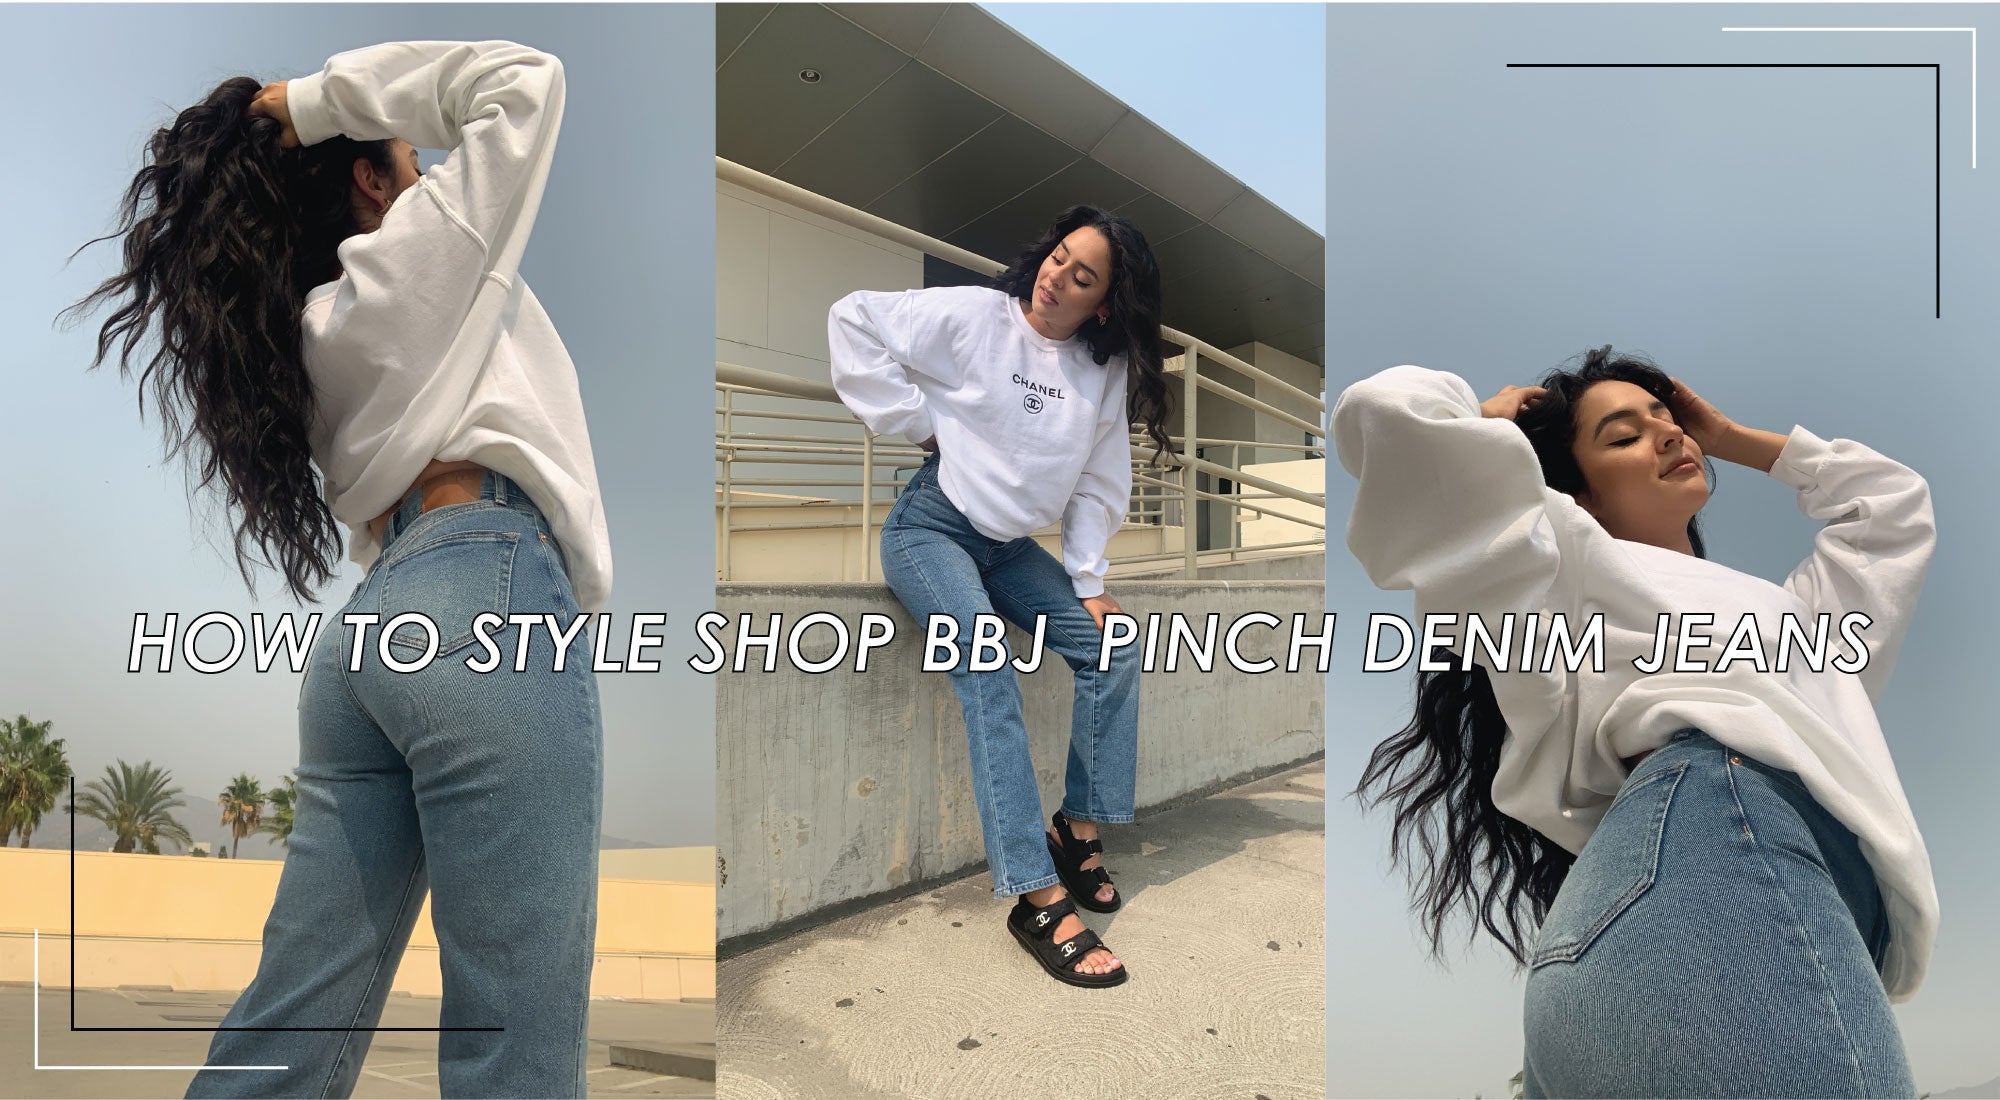 How To Style Shop BBJ Pinch Denim Jeans